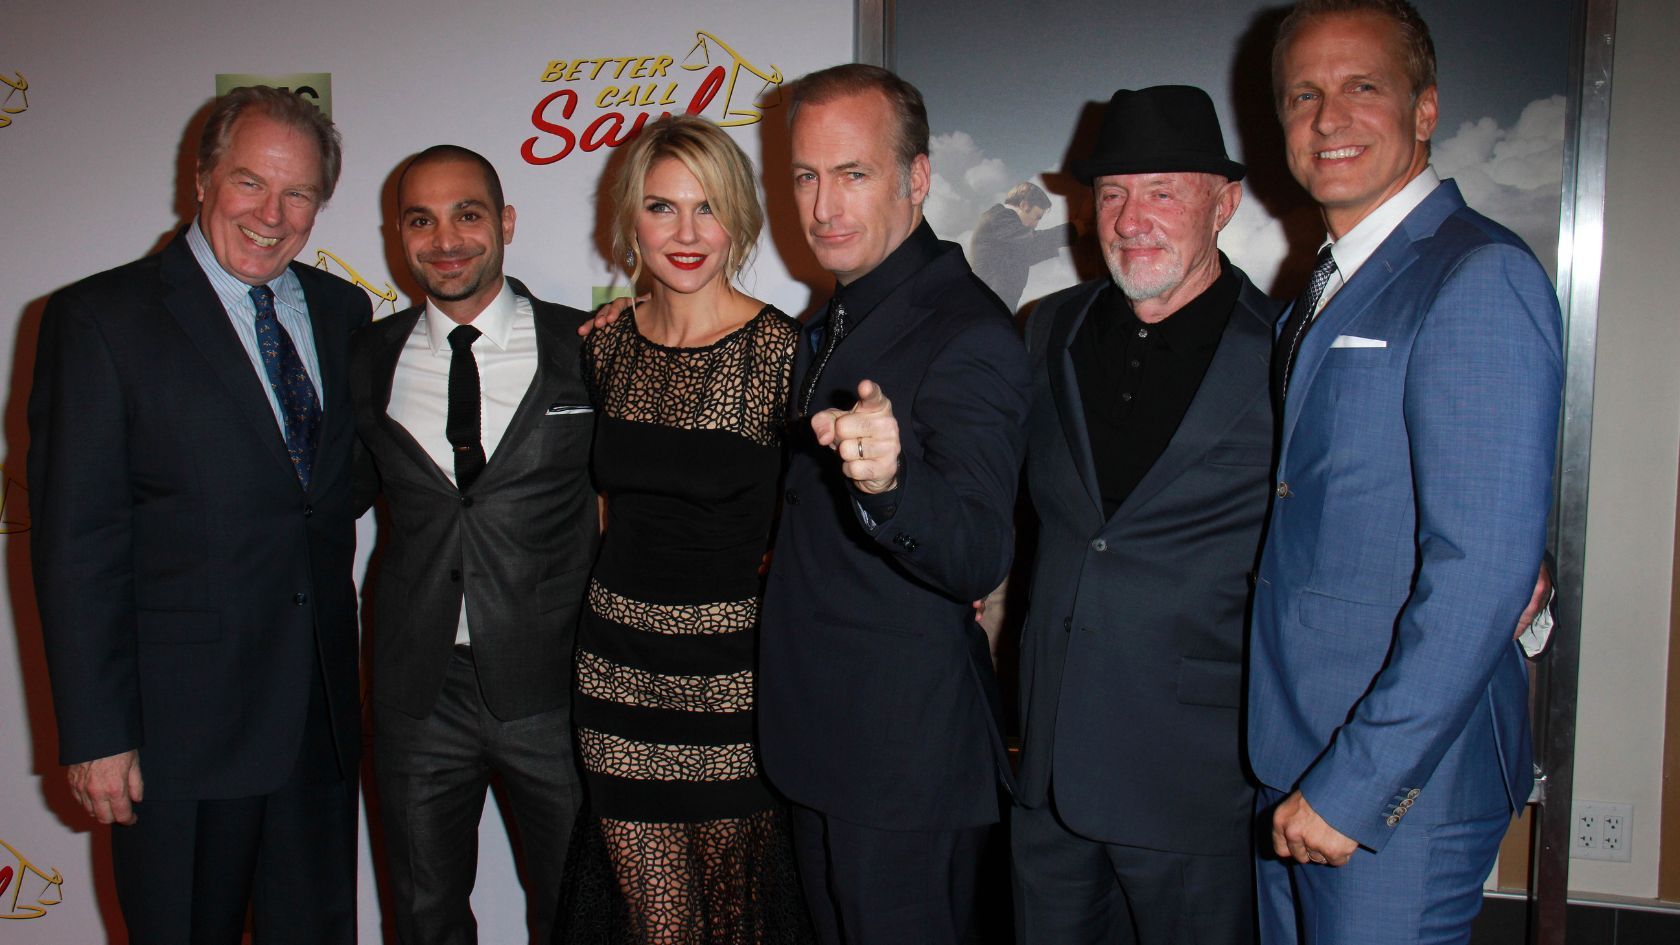  Better Call Saul - The Complete Series : Bob Odenkirk, Jonathan  Banks, Patrick Fabian: Movies & TV